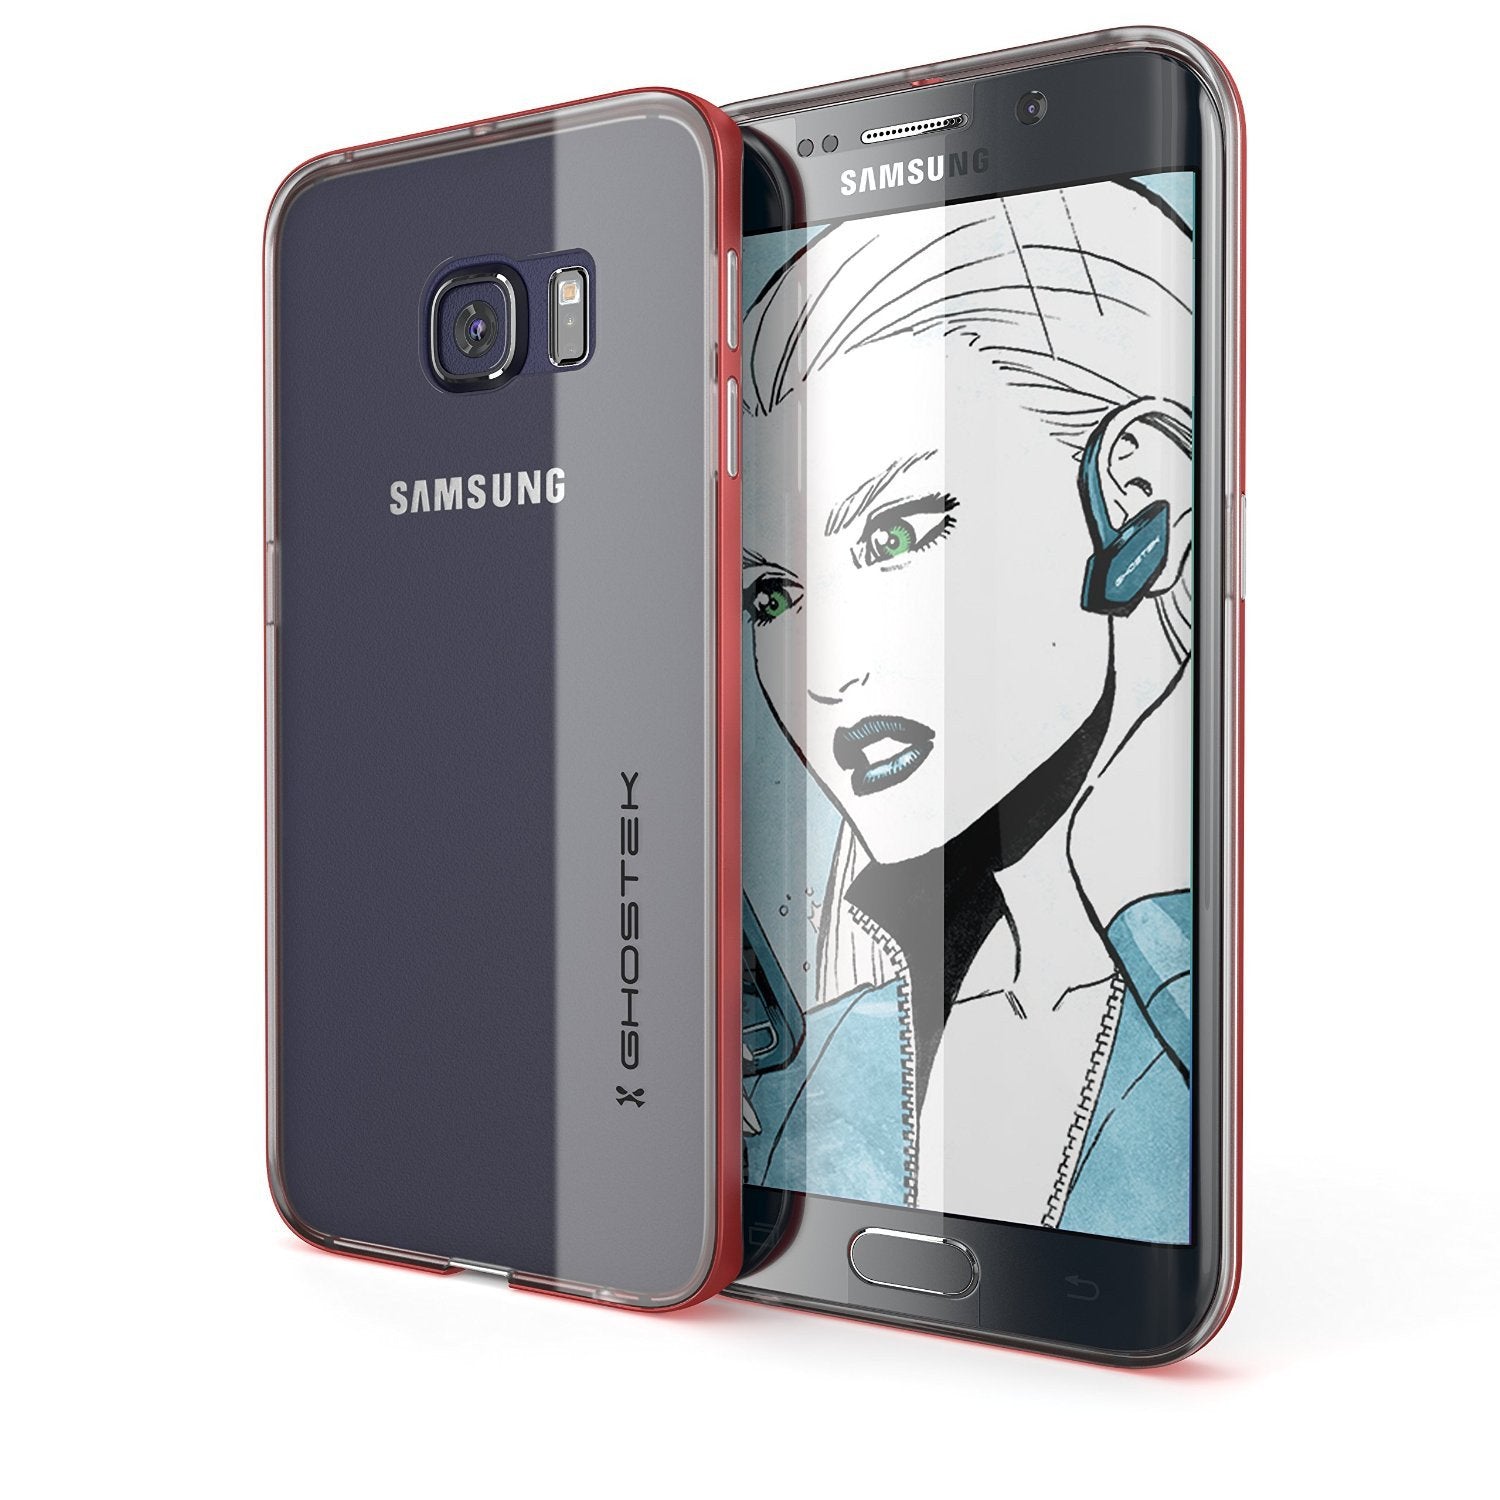 Galaxy S6 Edge+ Plus Case, Ghostek Red Cloak Series Slim Hybrid Impact Armor | Lifetime Warranty